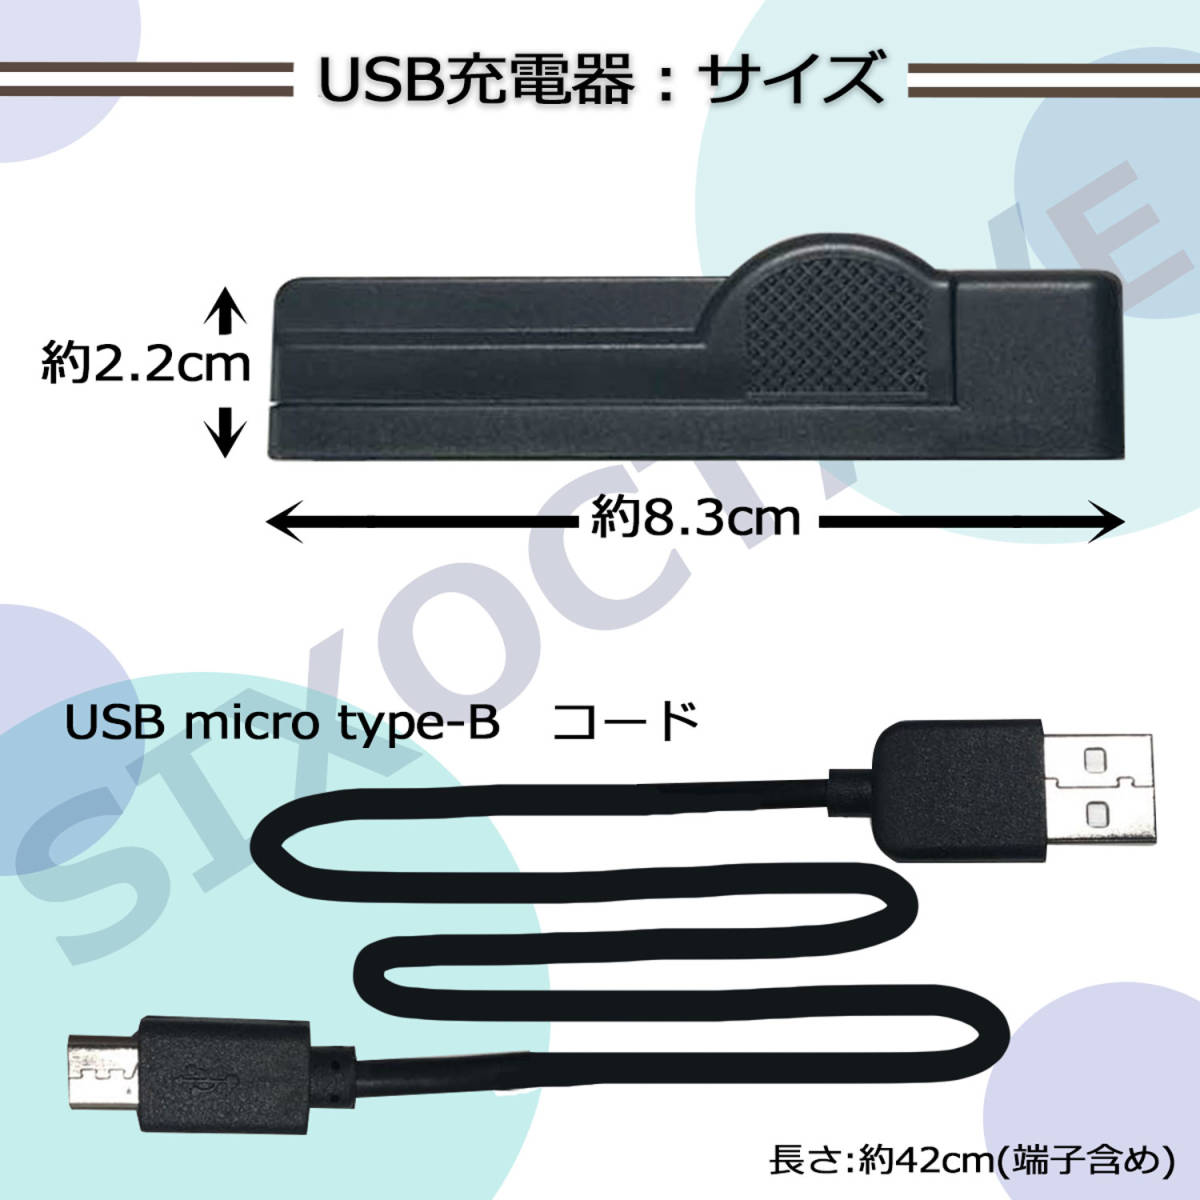 NP-BX1純正、互換対応互換充電器 USBチャージャーBC-TRX ソニー DSC-WX300 HDR-AS15 DSC-RX1 DSC-RX100 FDR-X3000 FDR-X3000R DSC-RX100 II_画像5